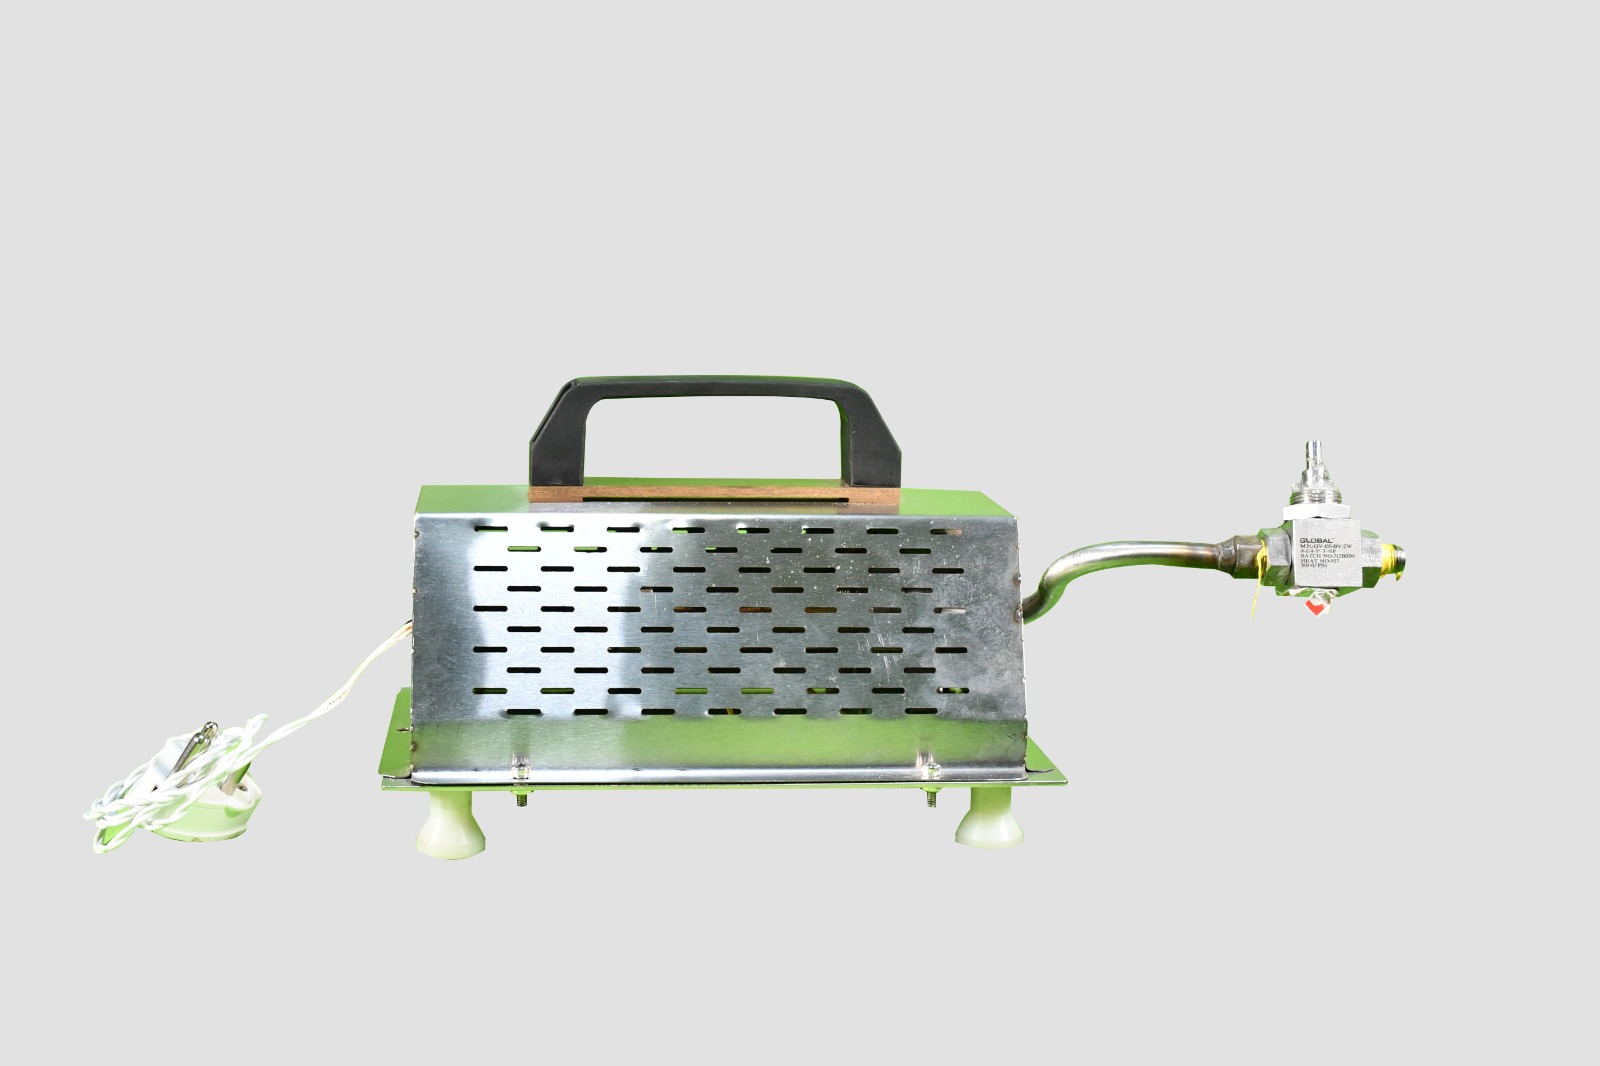 Heating device using renewable energy 